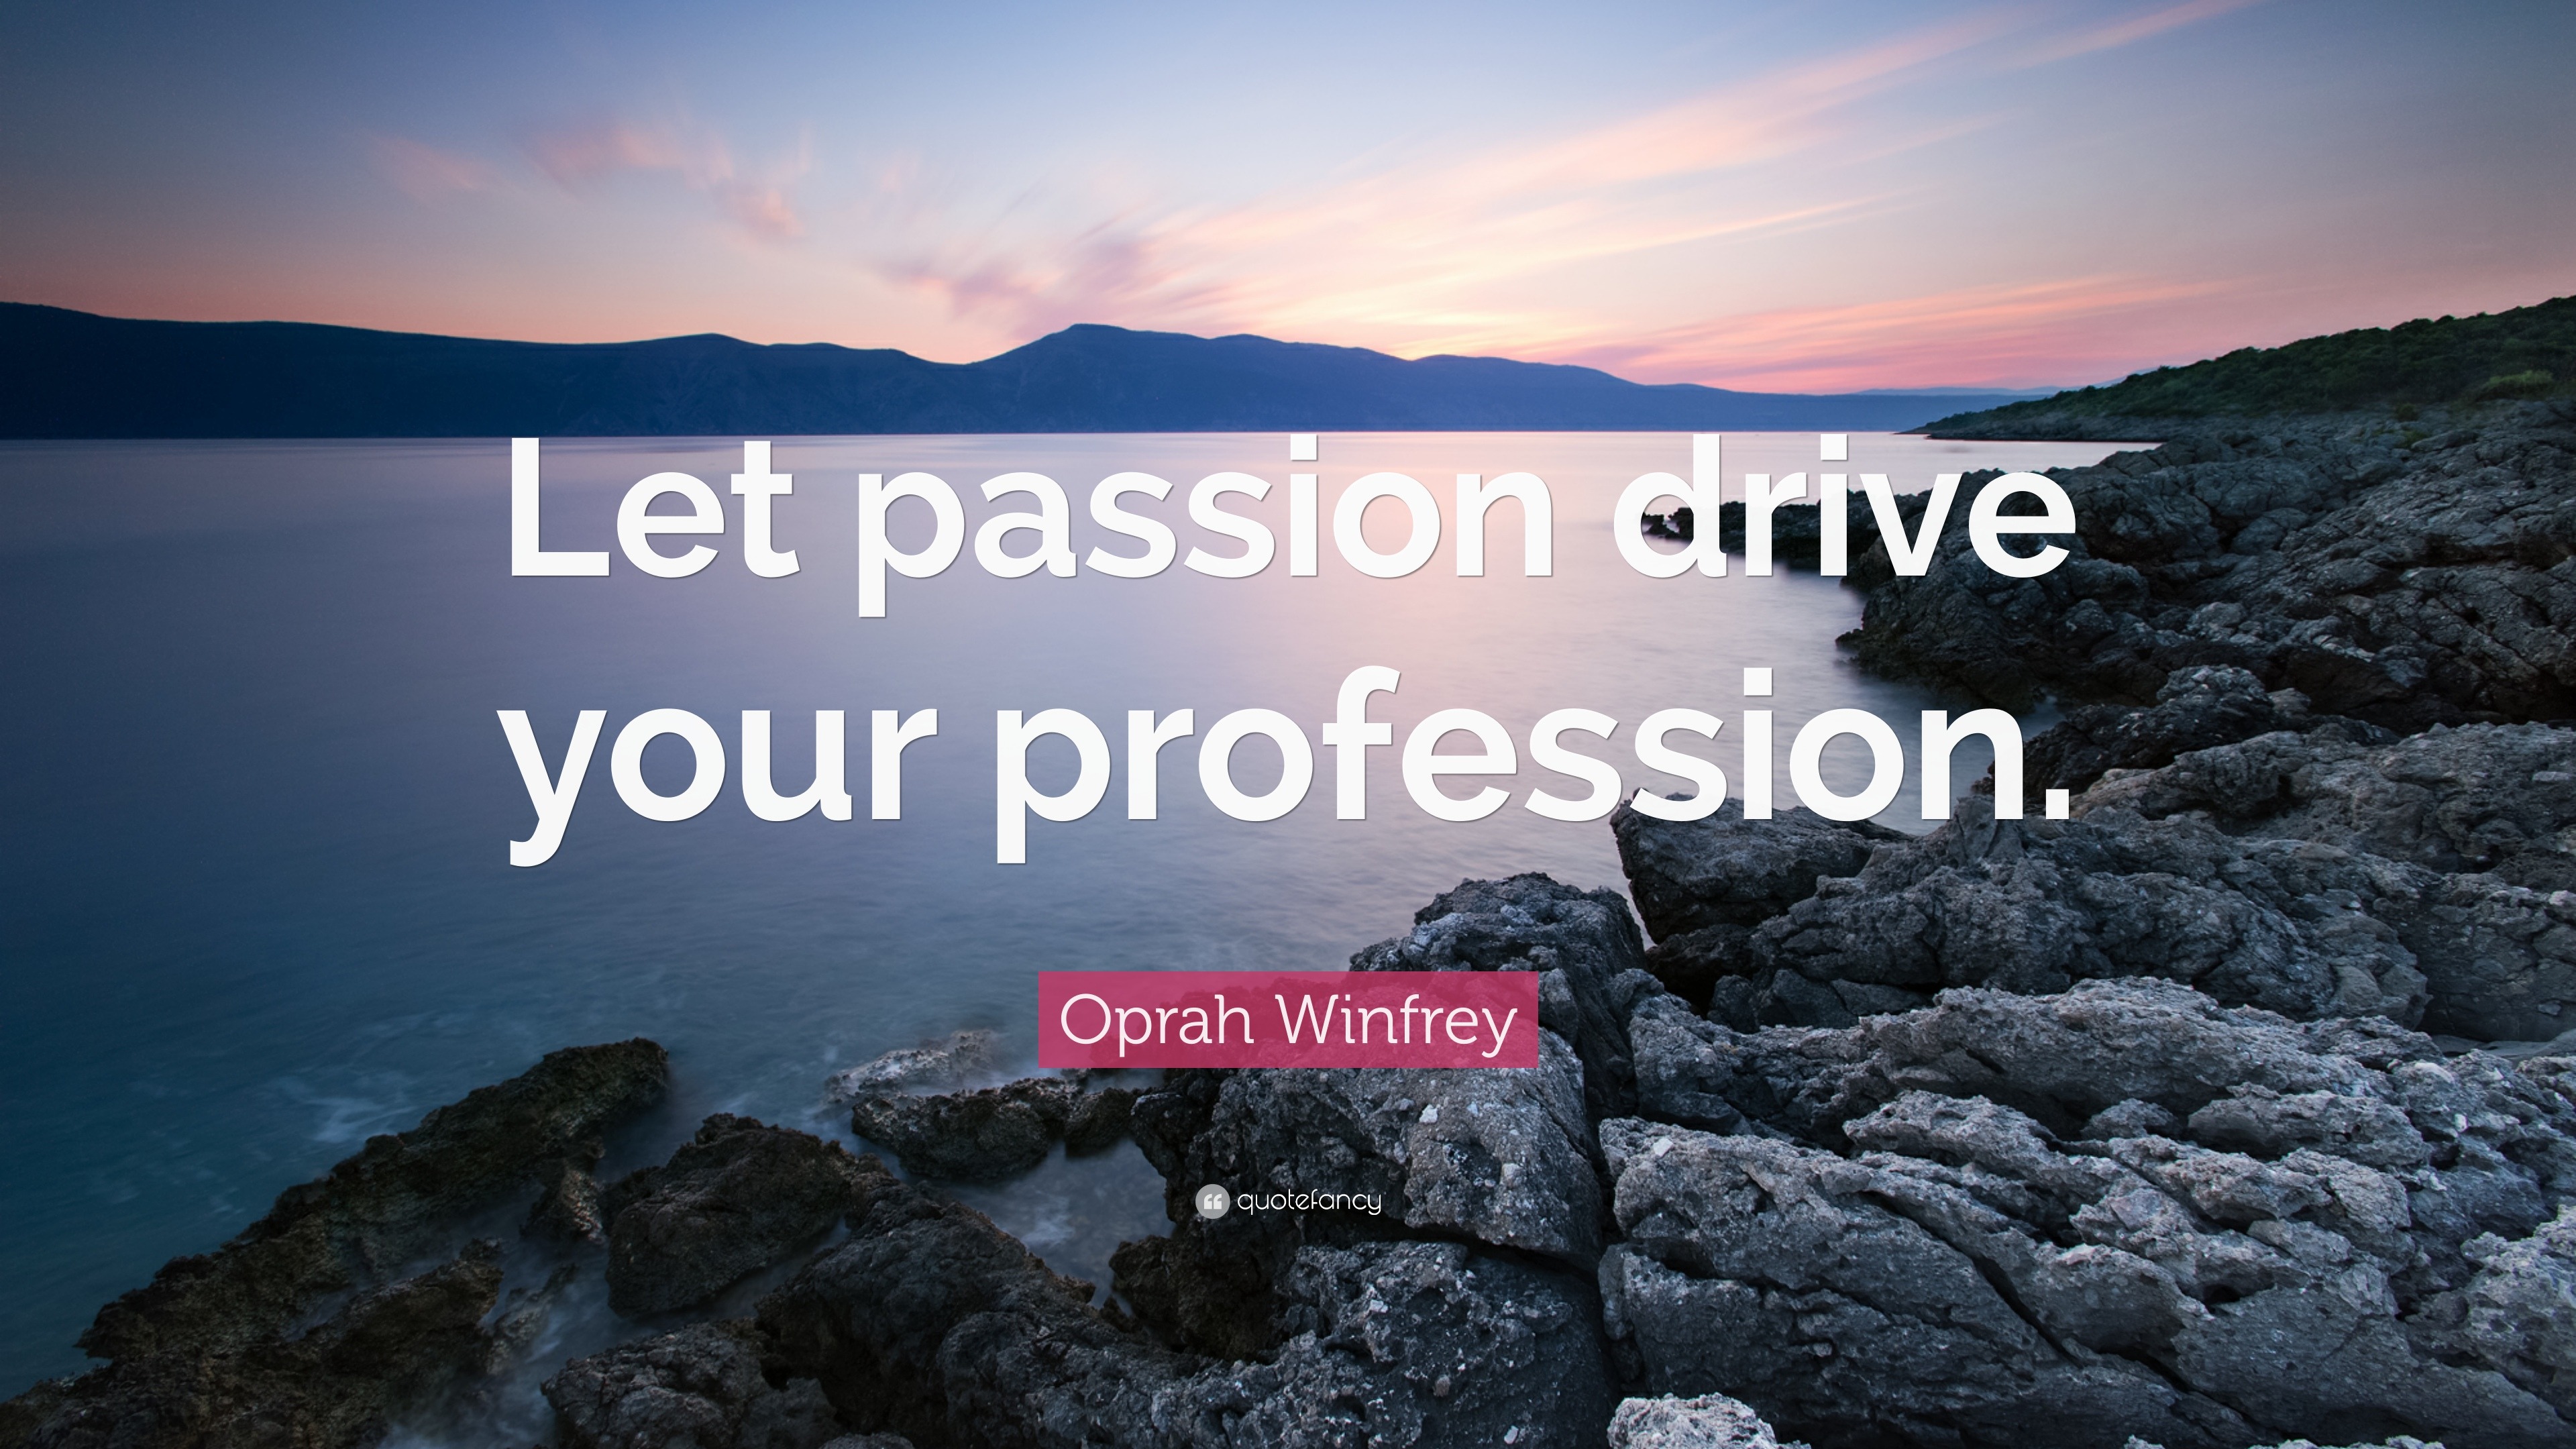 Oprah Winfrey Quote “let Passion Drive Your Profession”